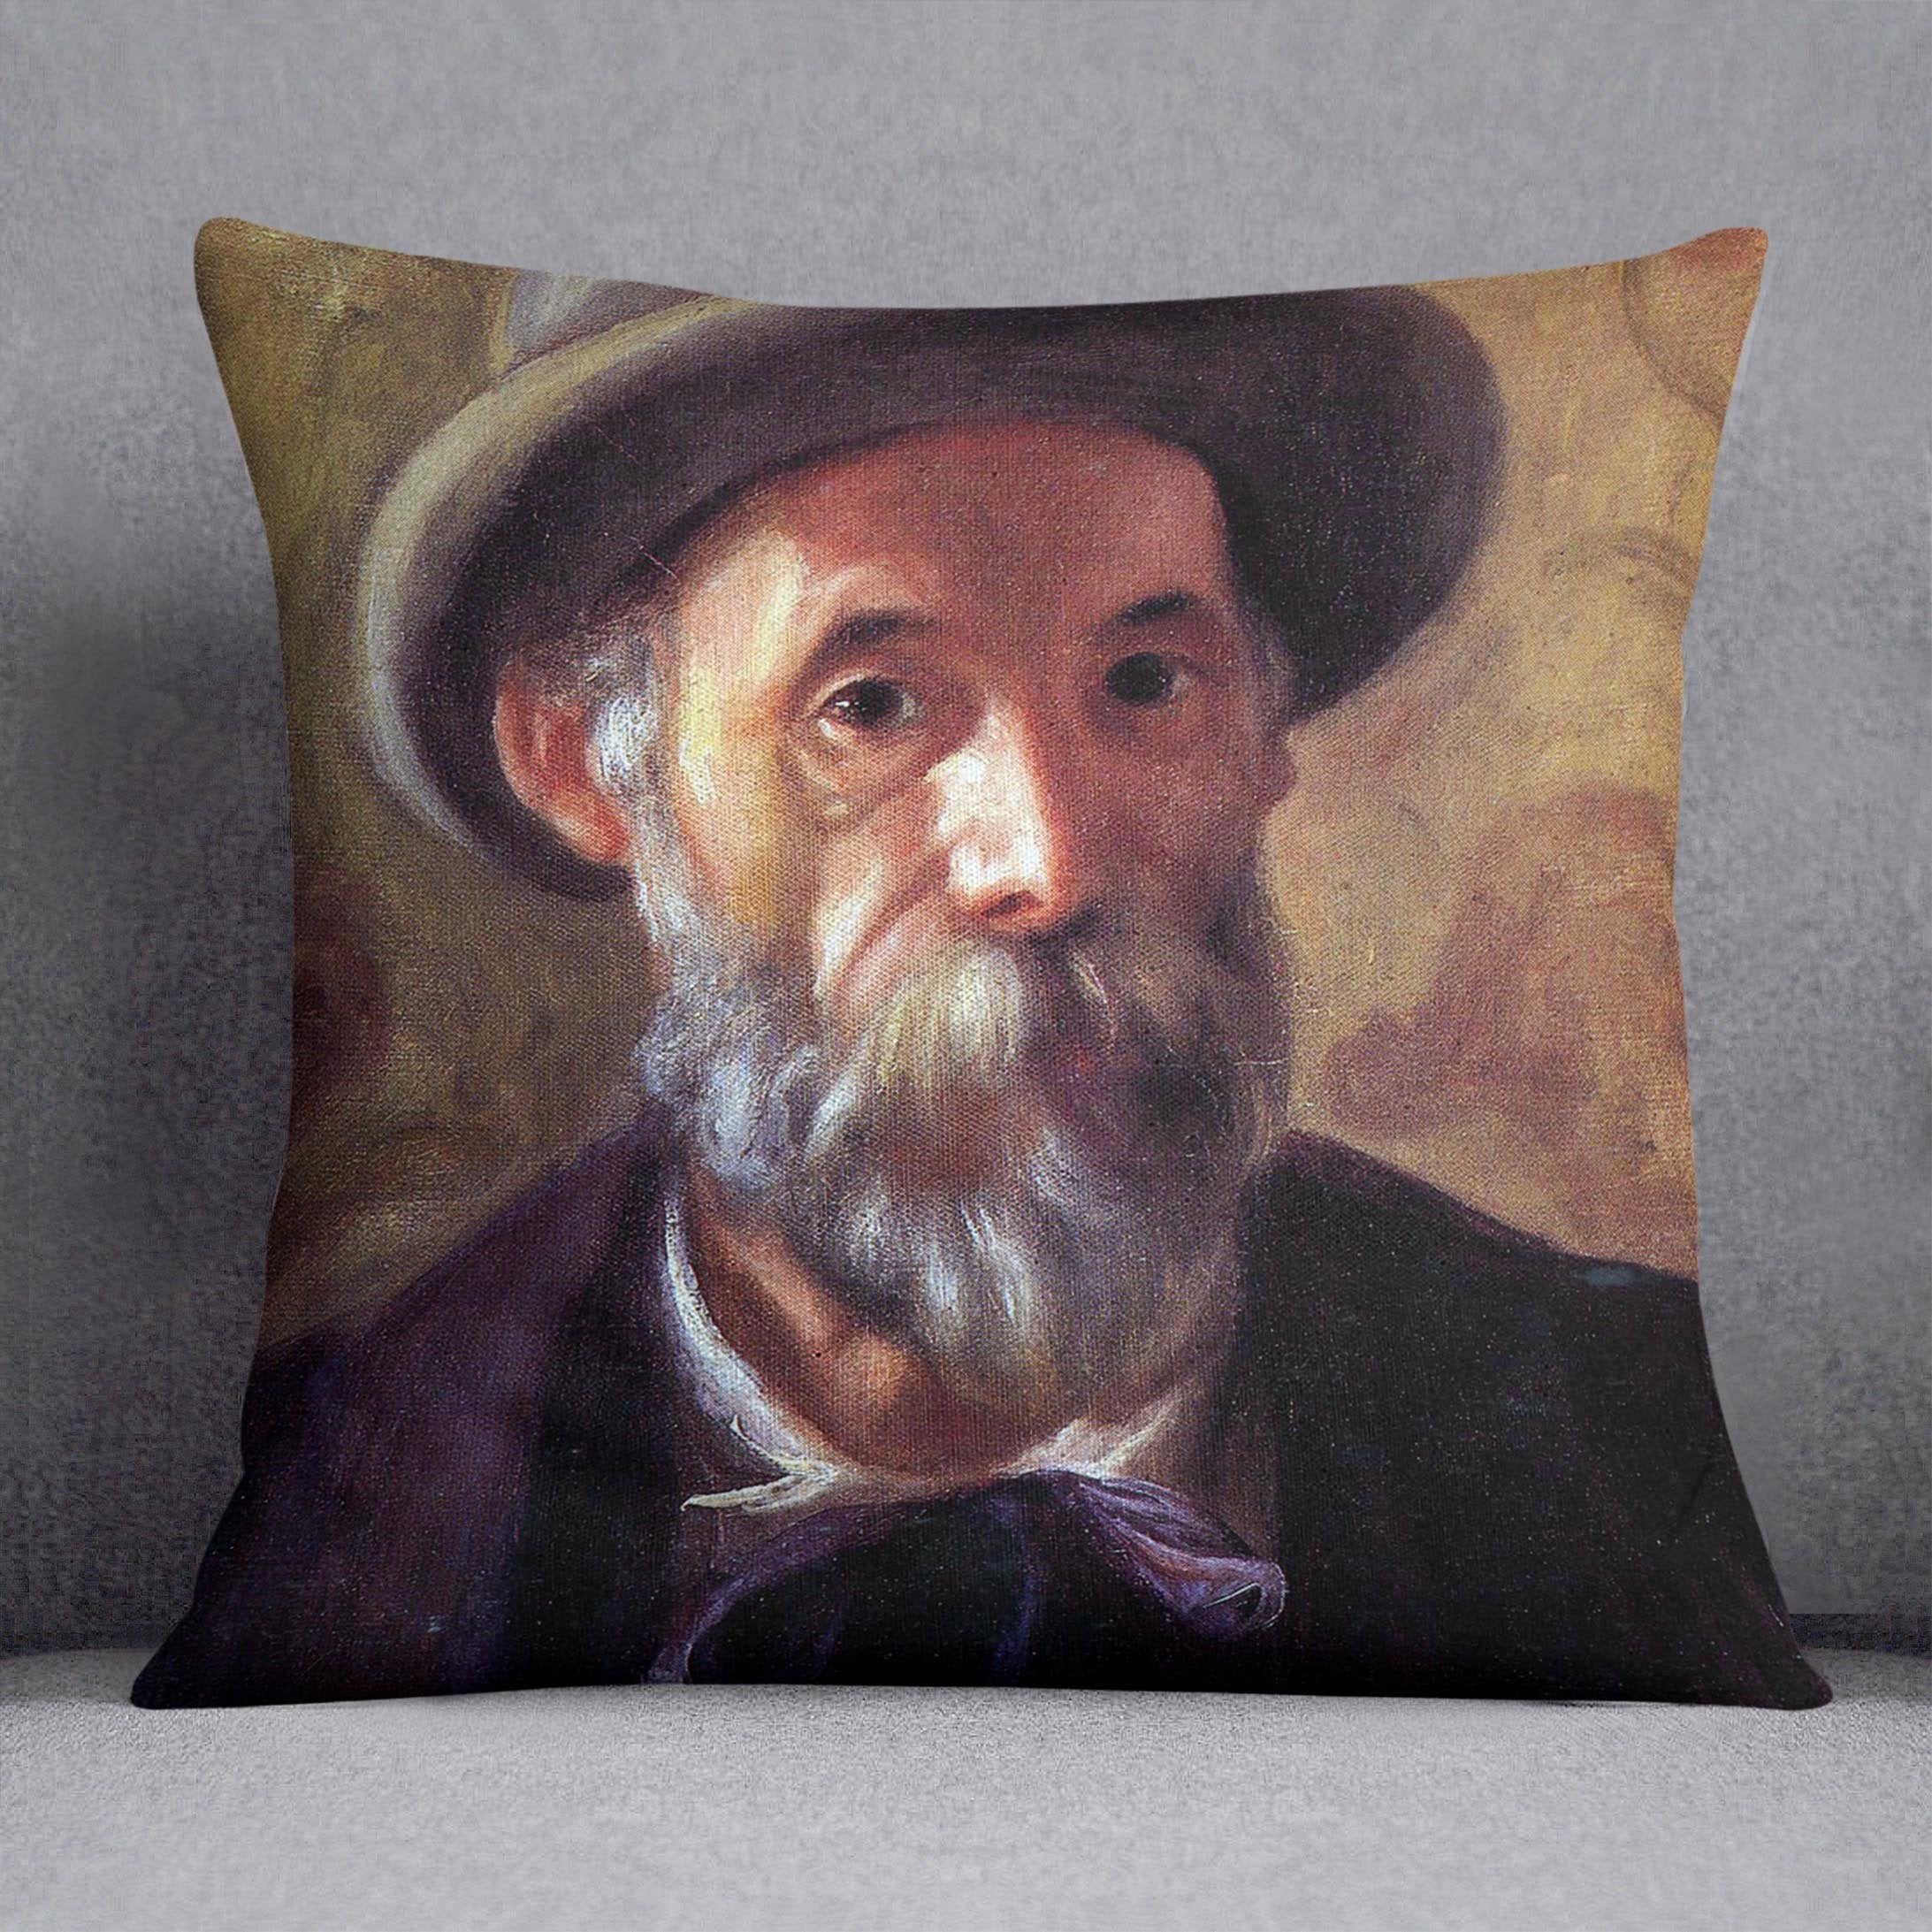 Self Portrait 1 by Renoir Throw Pillow